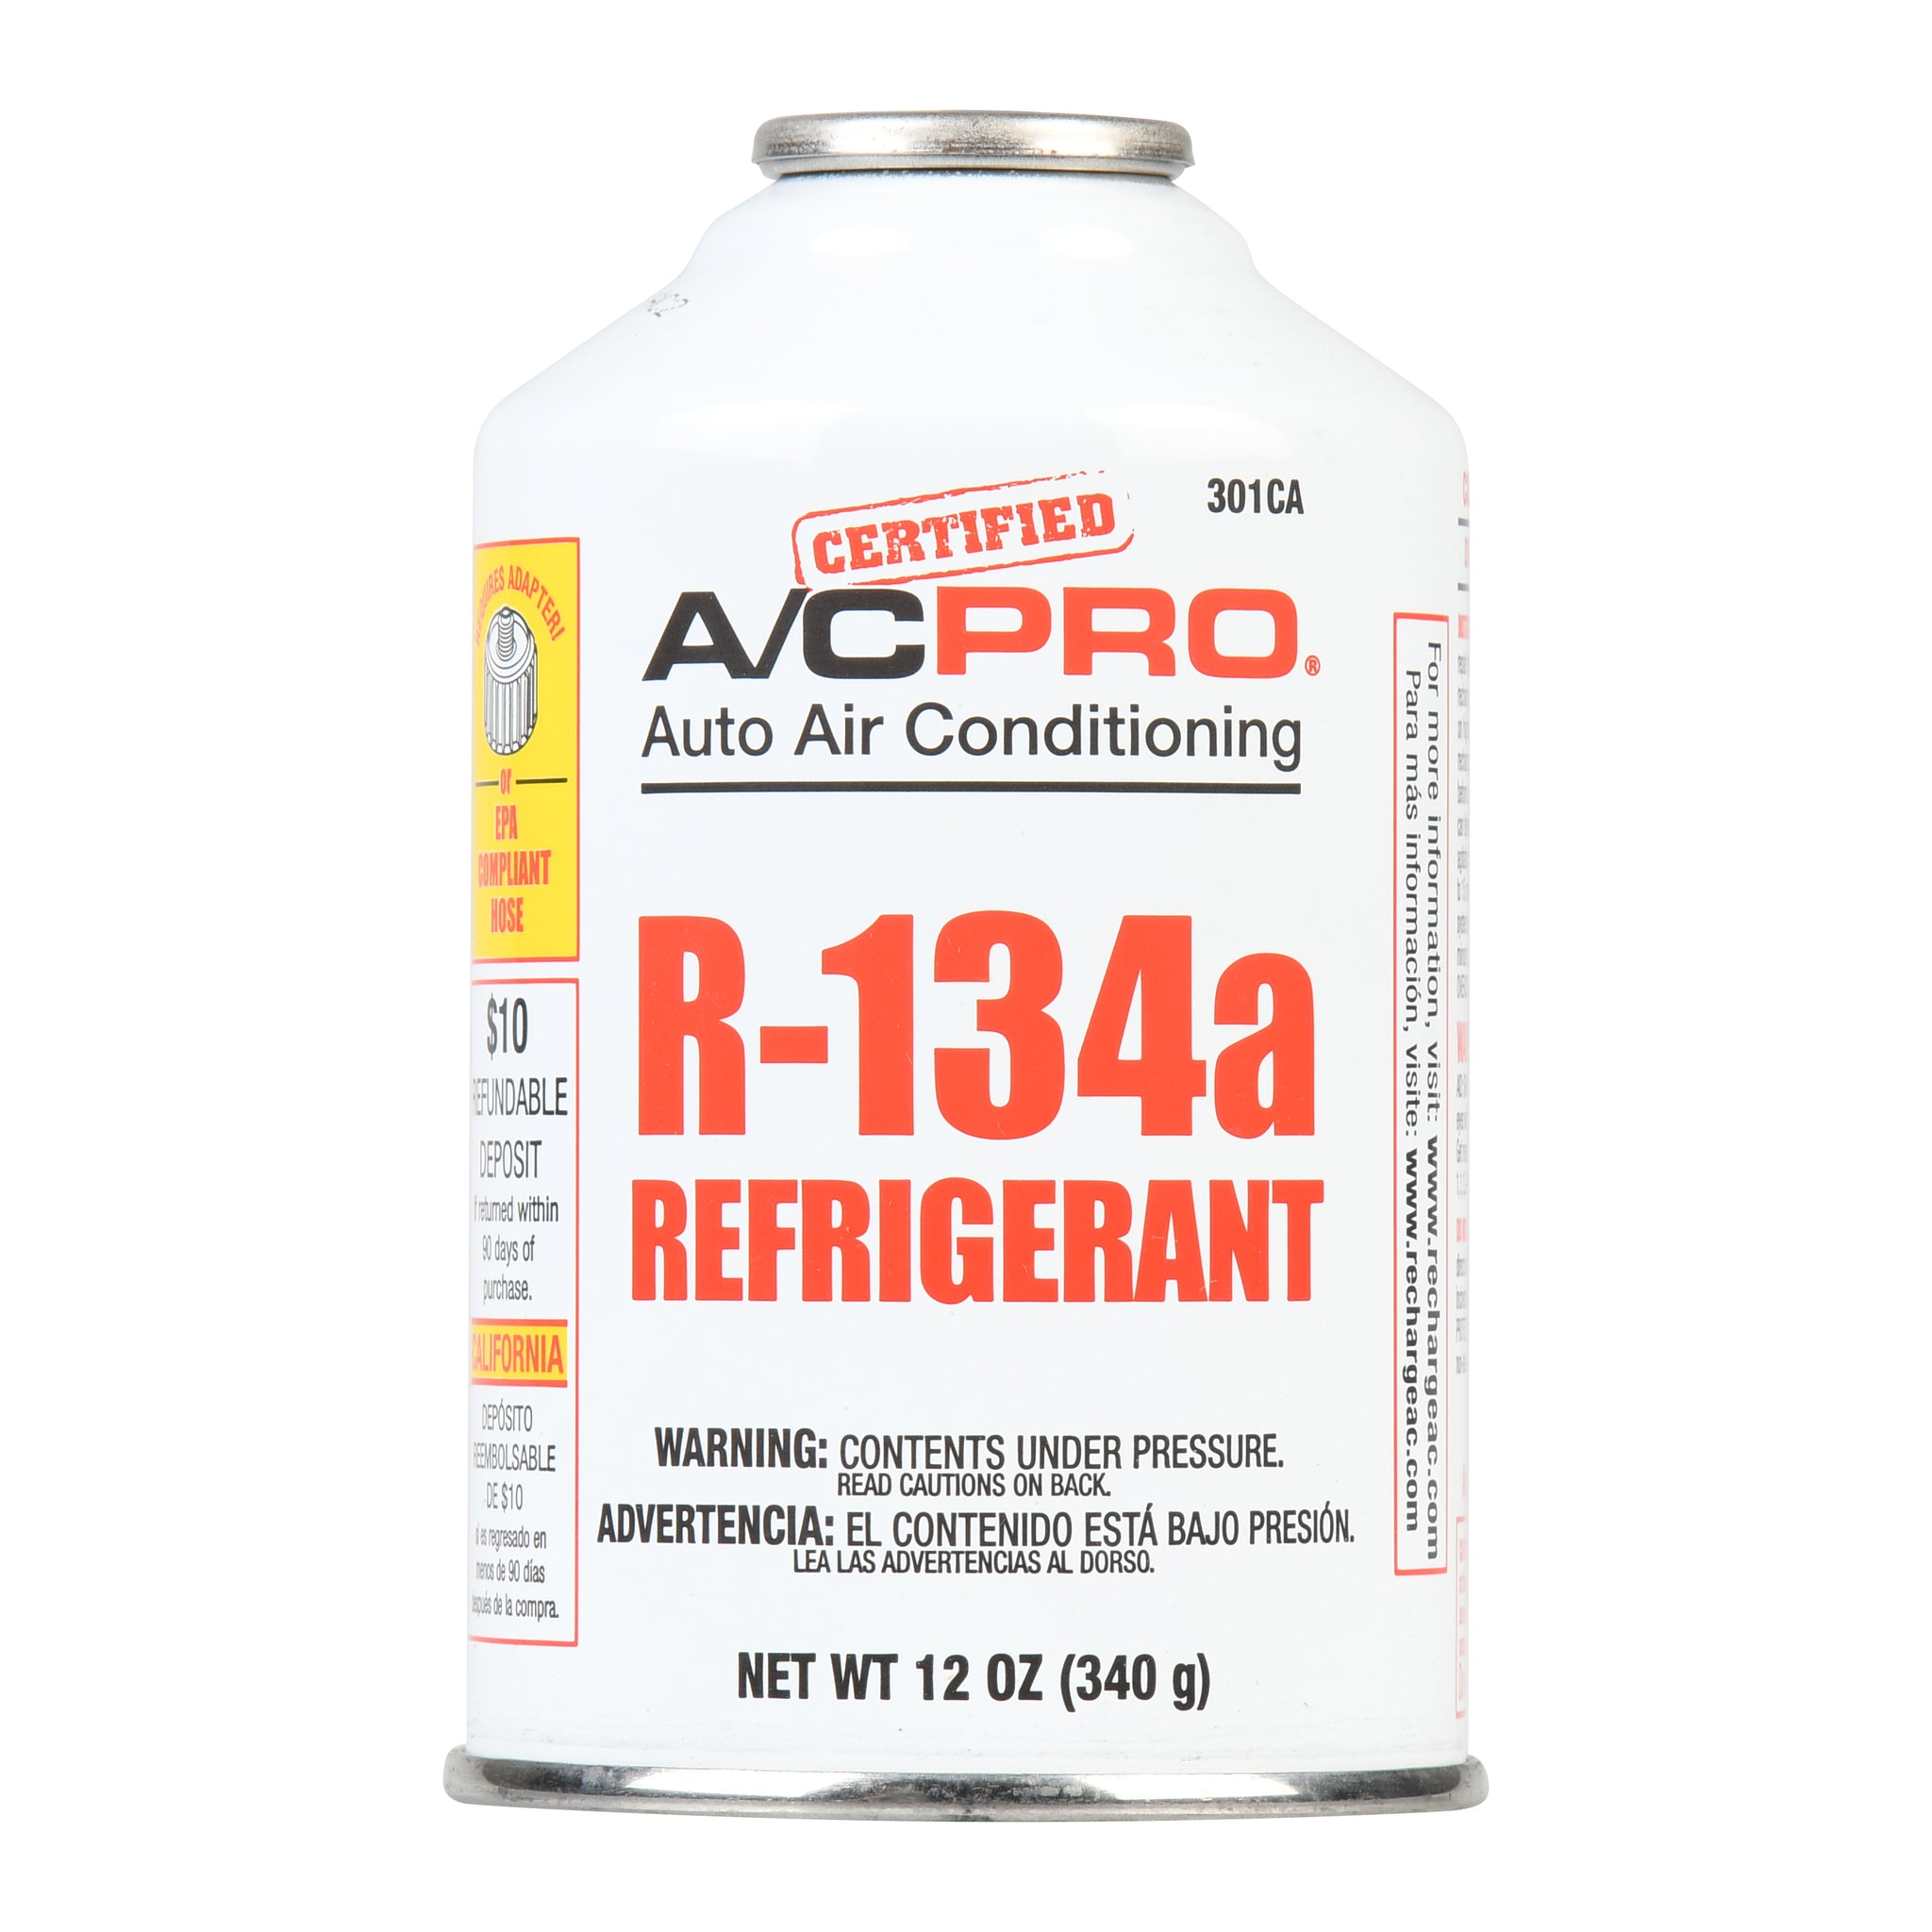 Certified AC Pro Auto Air Conditioner R-134a Refrigerant, 12 oz, 301CA